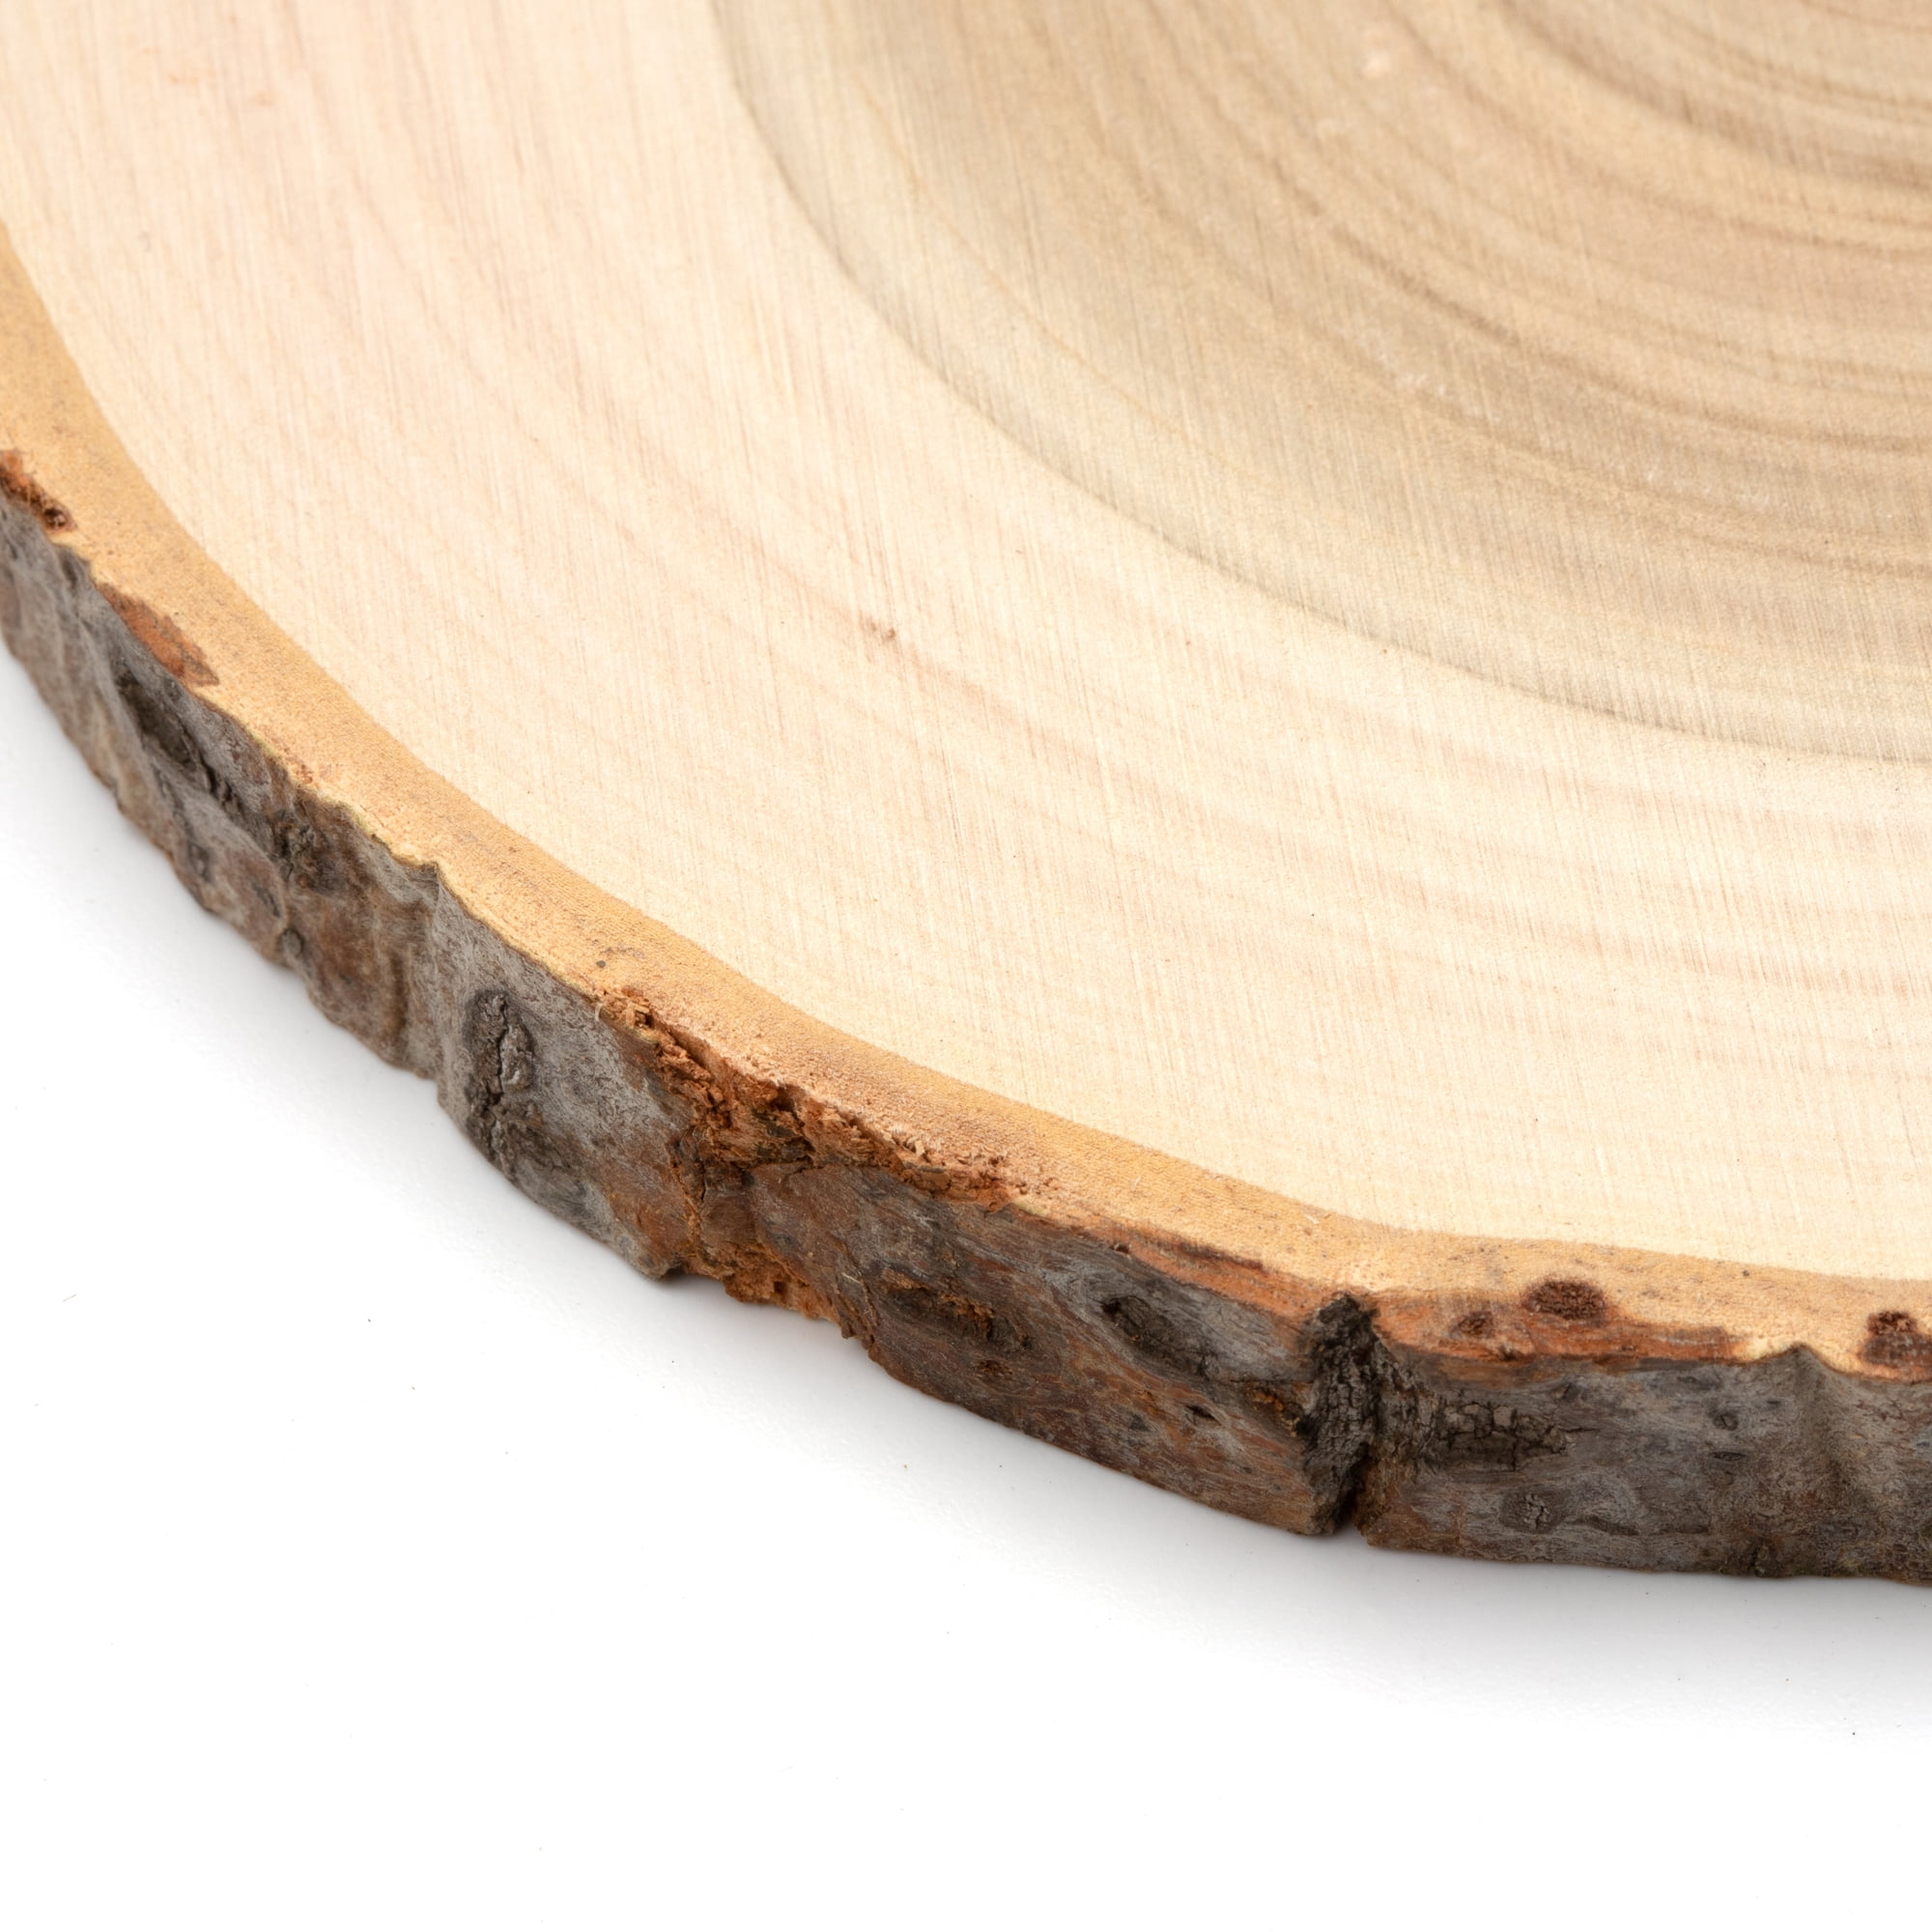 7-inch wood slice - Rustic Wood Slices